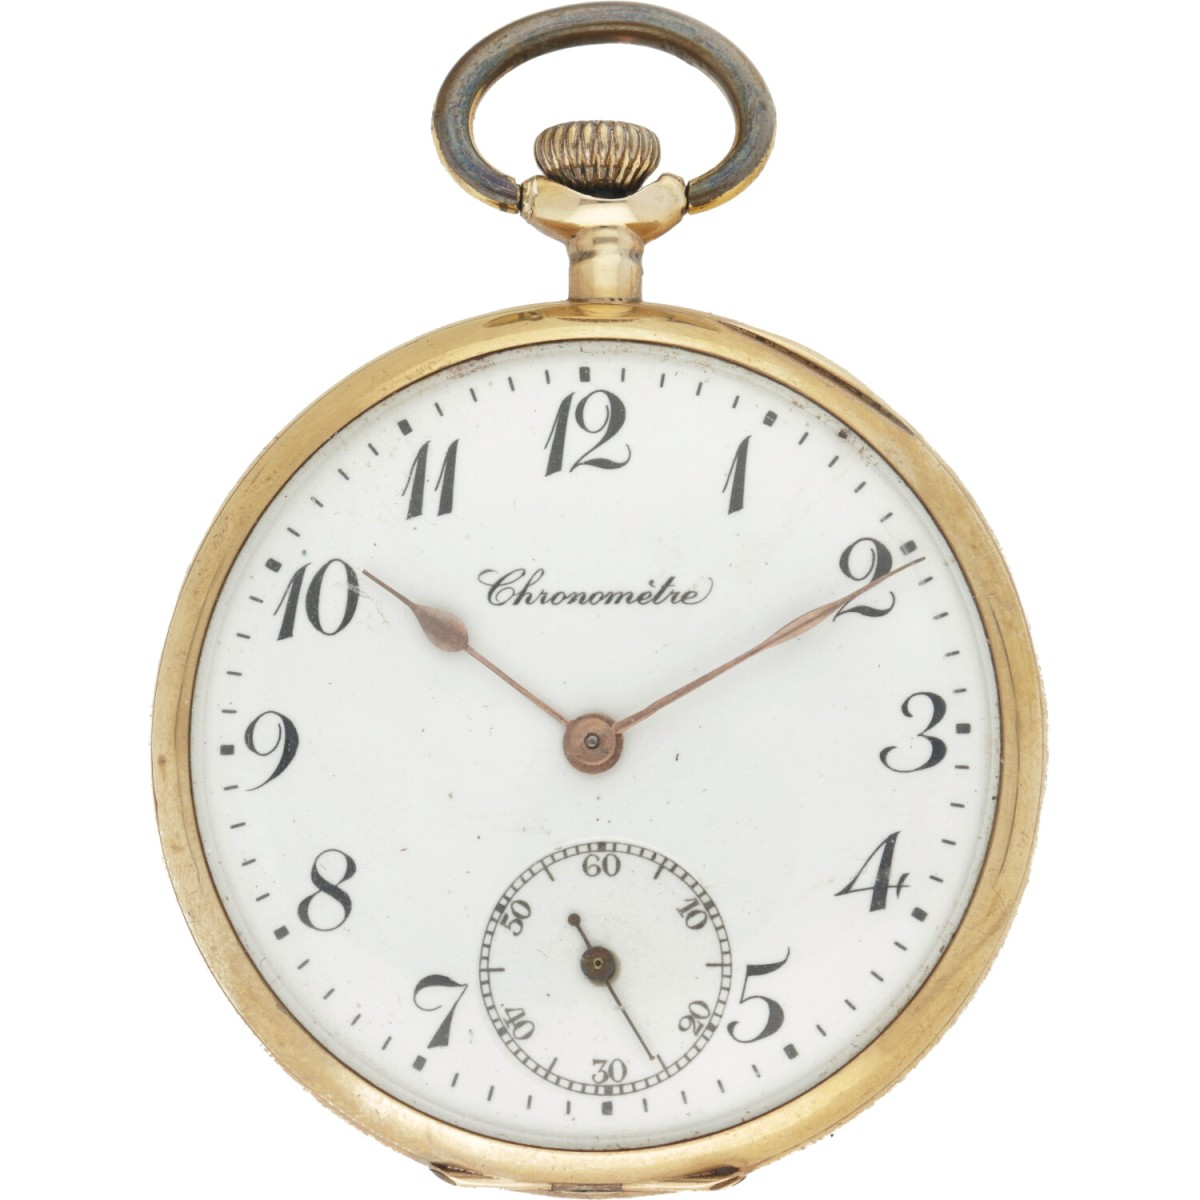 Chronométre ankergang - Heren zakhorloge - circa. 1880.